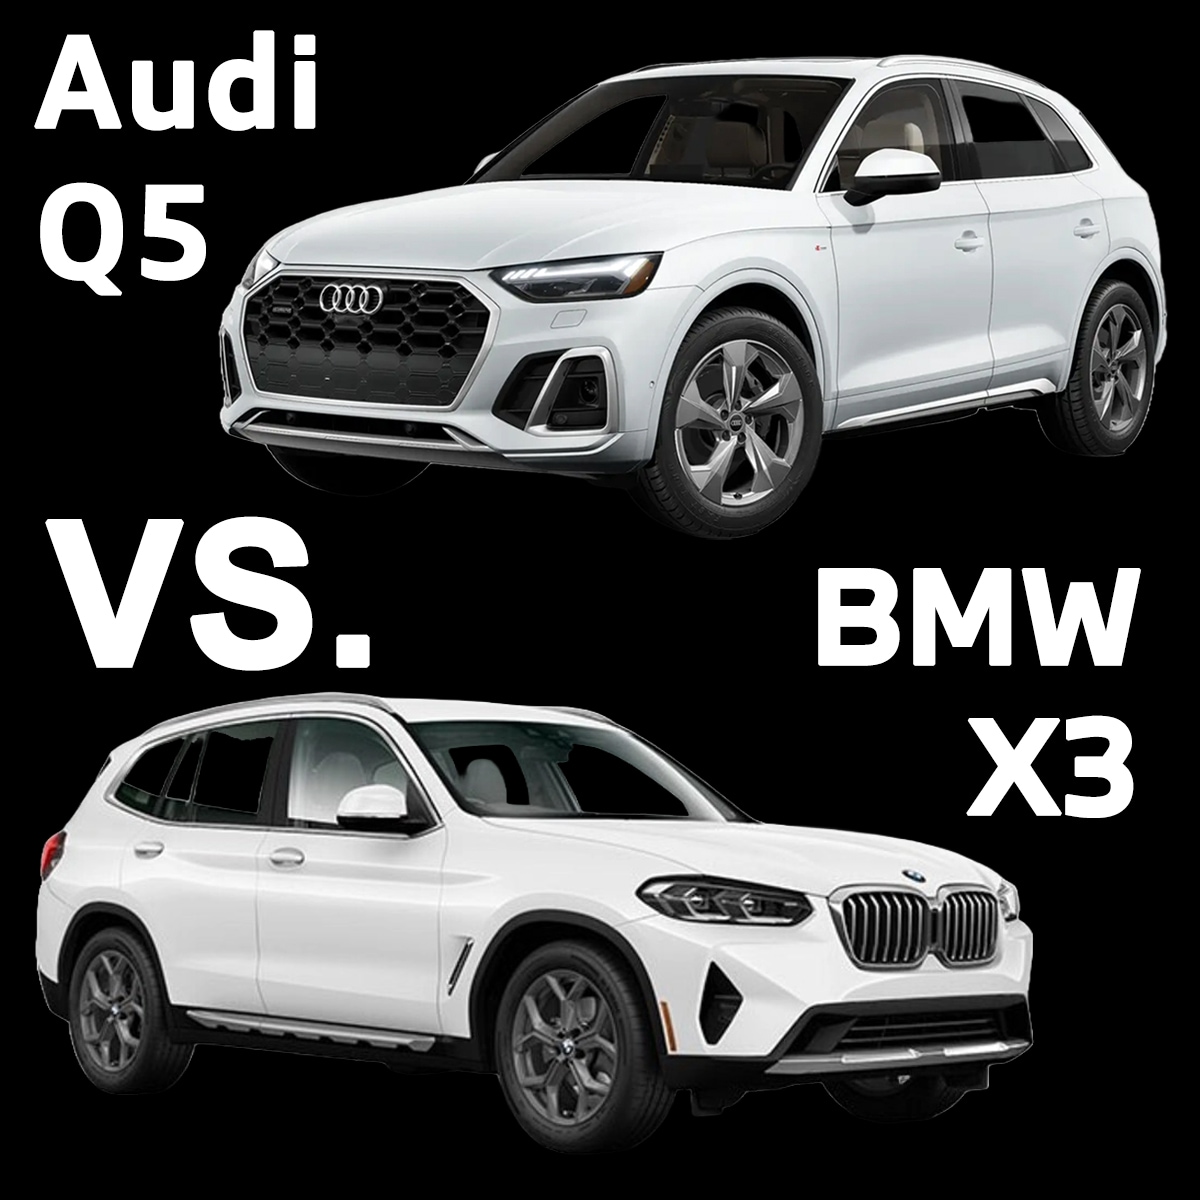 BMW X3 vs Audi Q5  Size, Horsepower, and Fuel Economy